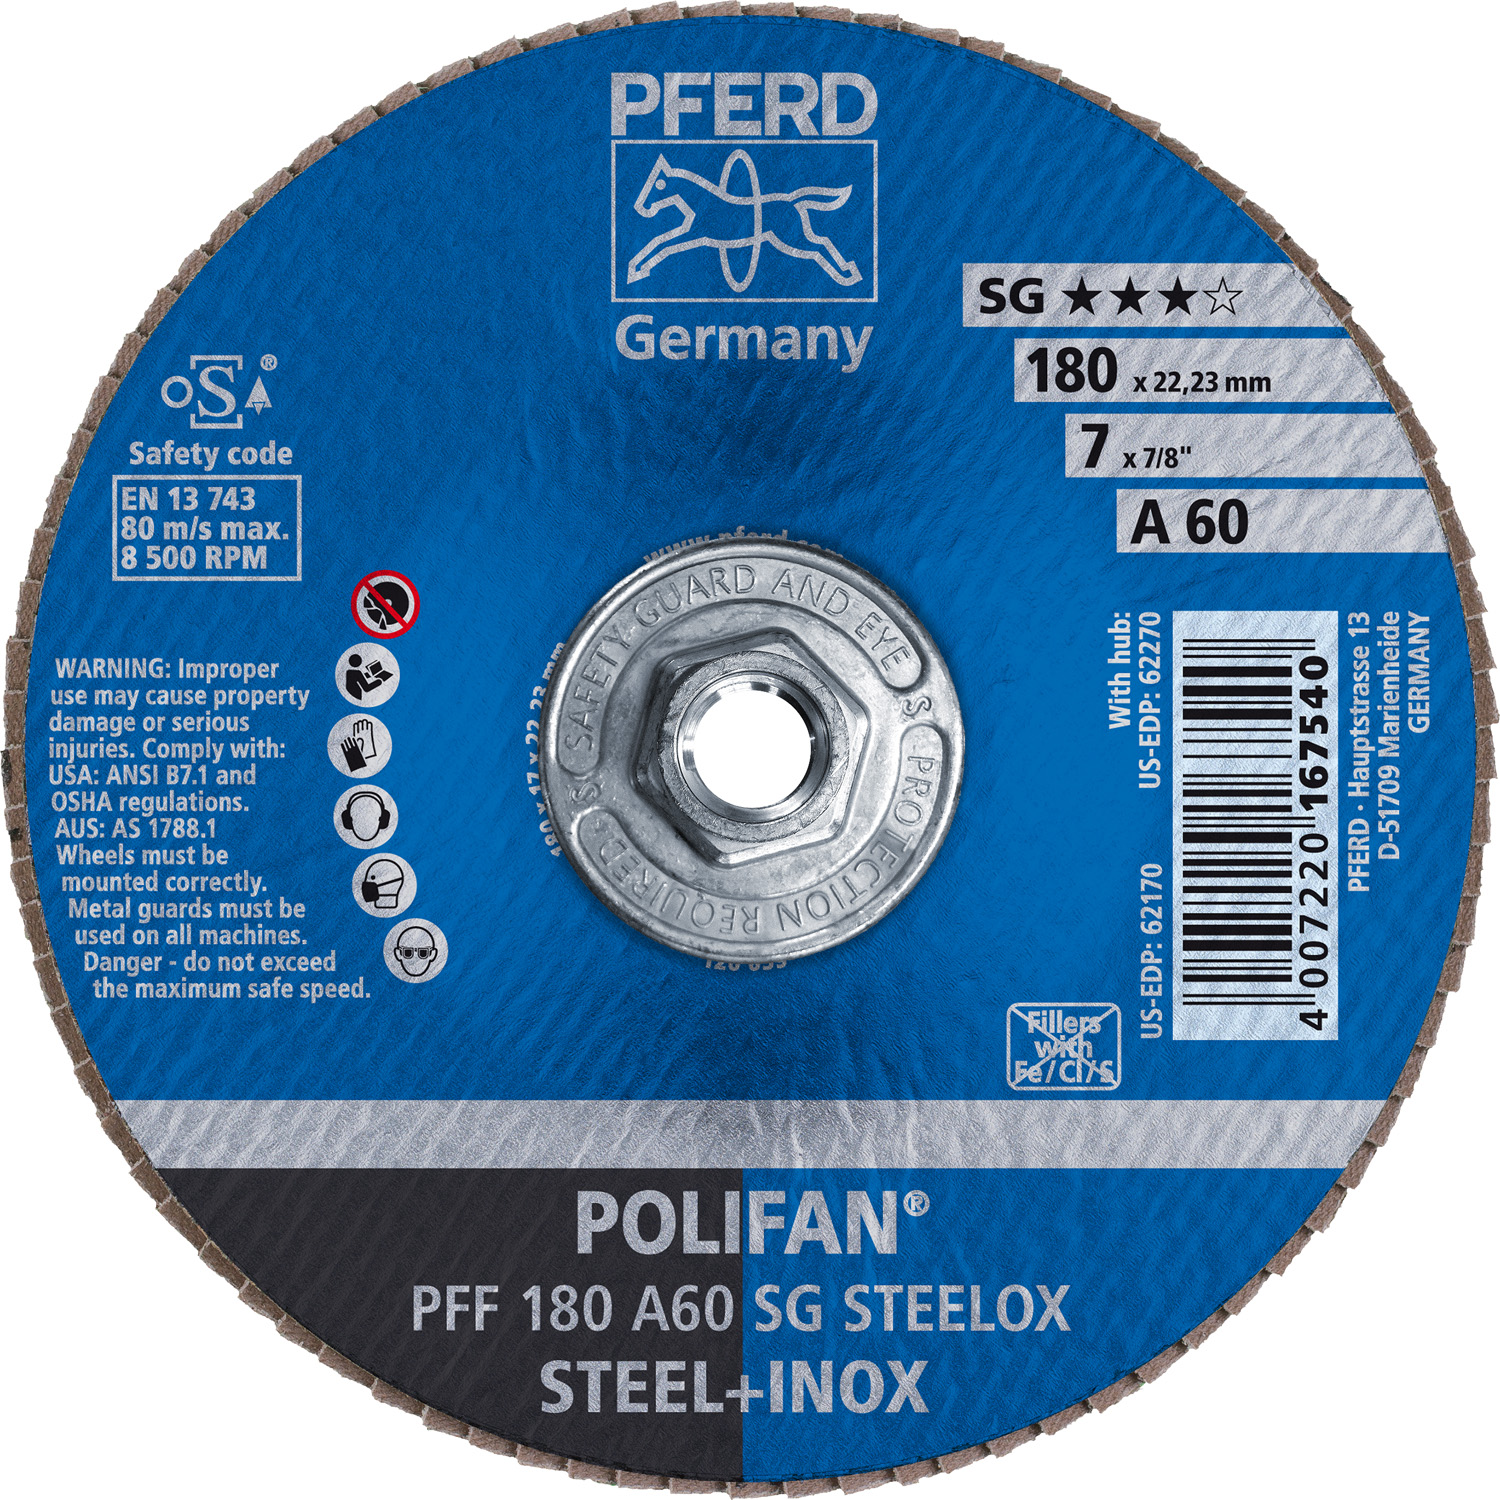 7" x 5/8-11 Thd. POLIFAN® Flap Disc, A SG STEELOX, Aluminum Oxide, 60 Grit, Conical